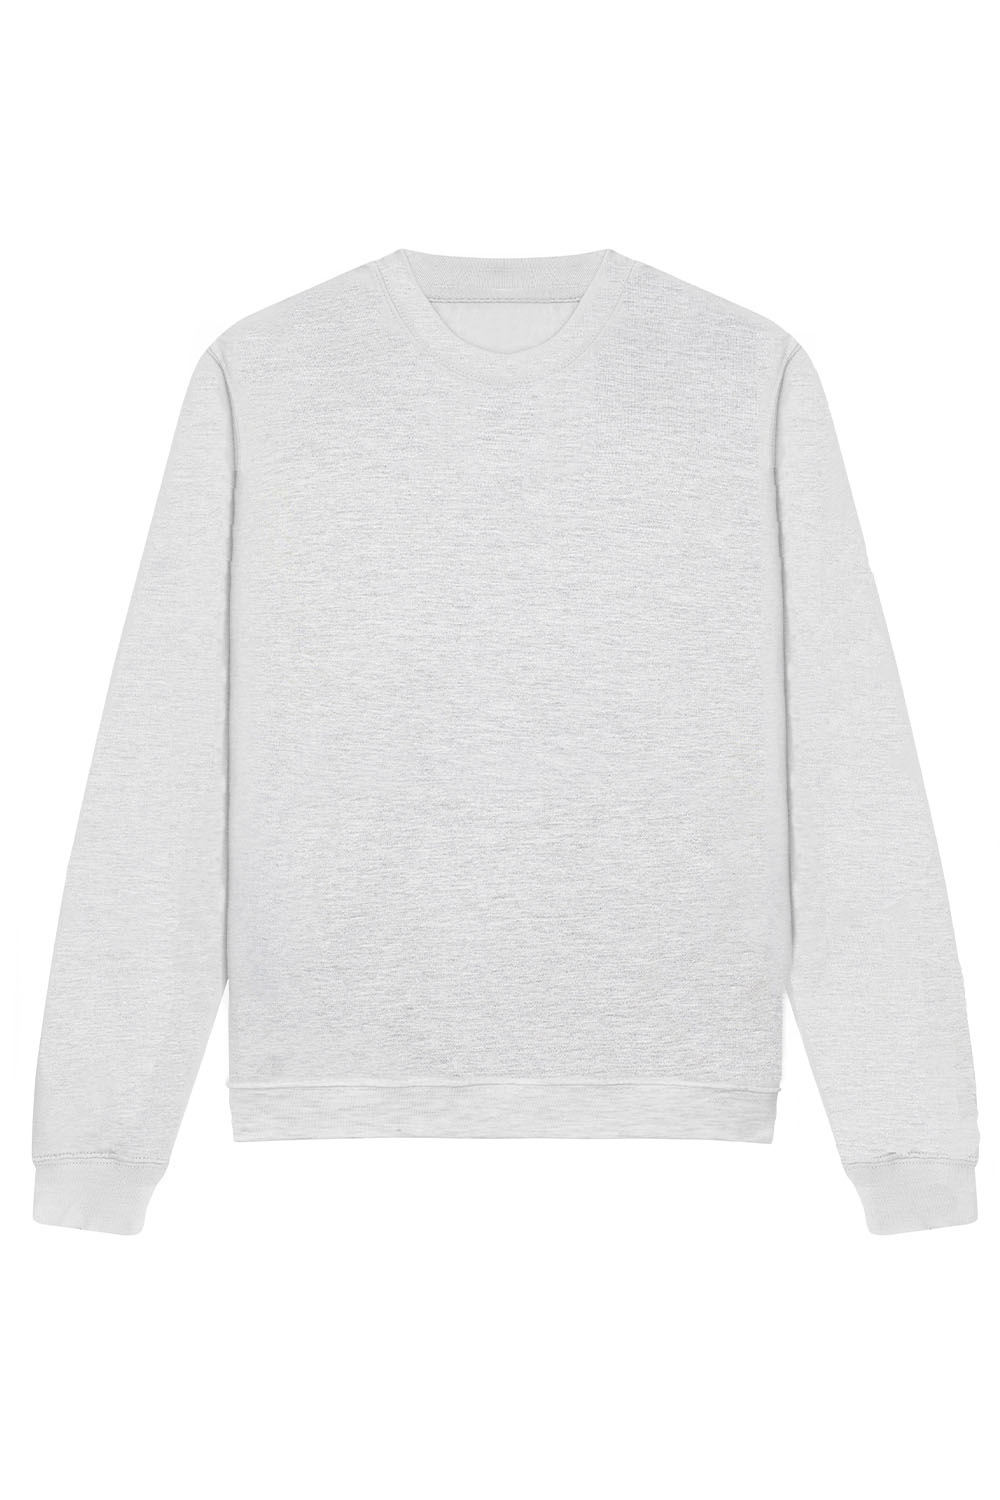 Plain Sweatshirt In Ash Grey (Single)